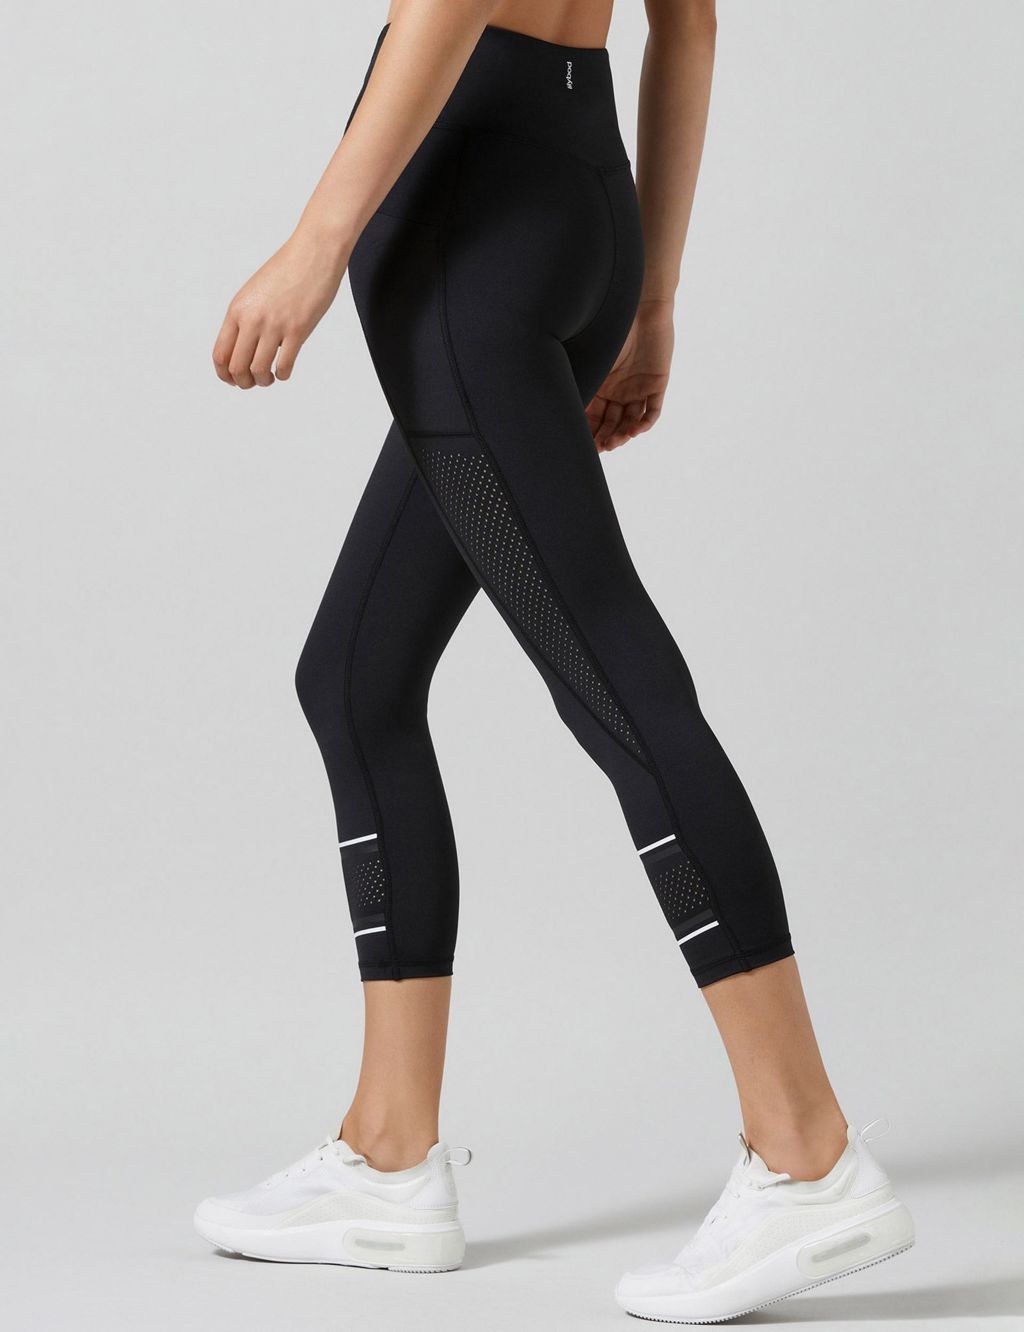 Lilybod Women's Black Stripe Activewear Leggings Size Small S Gym